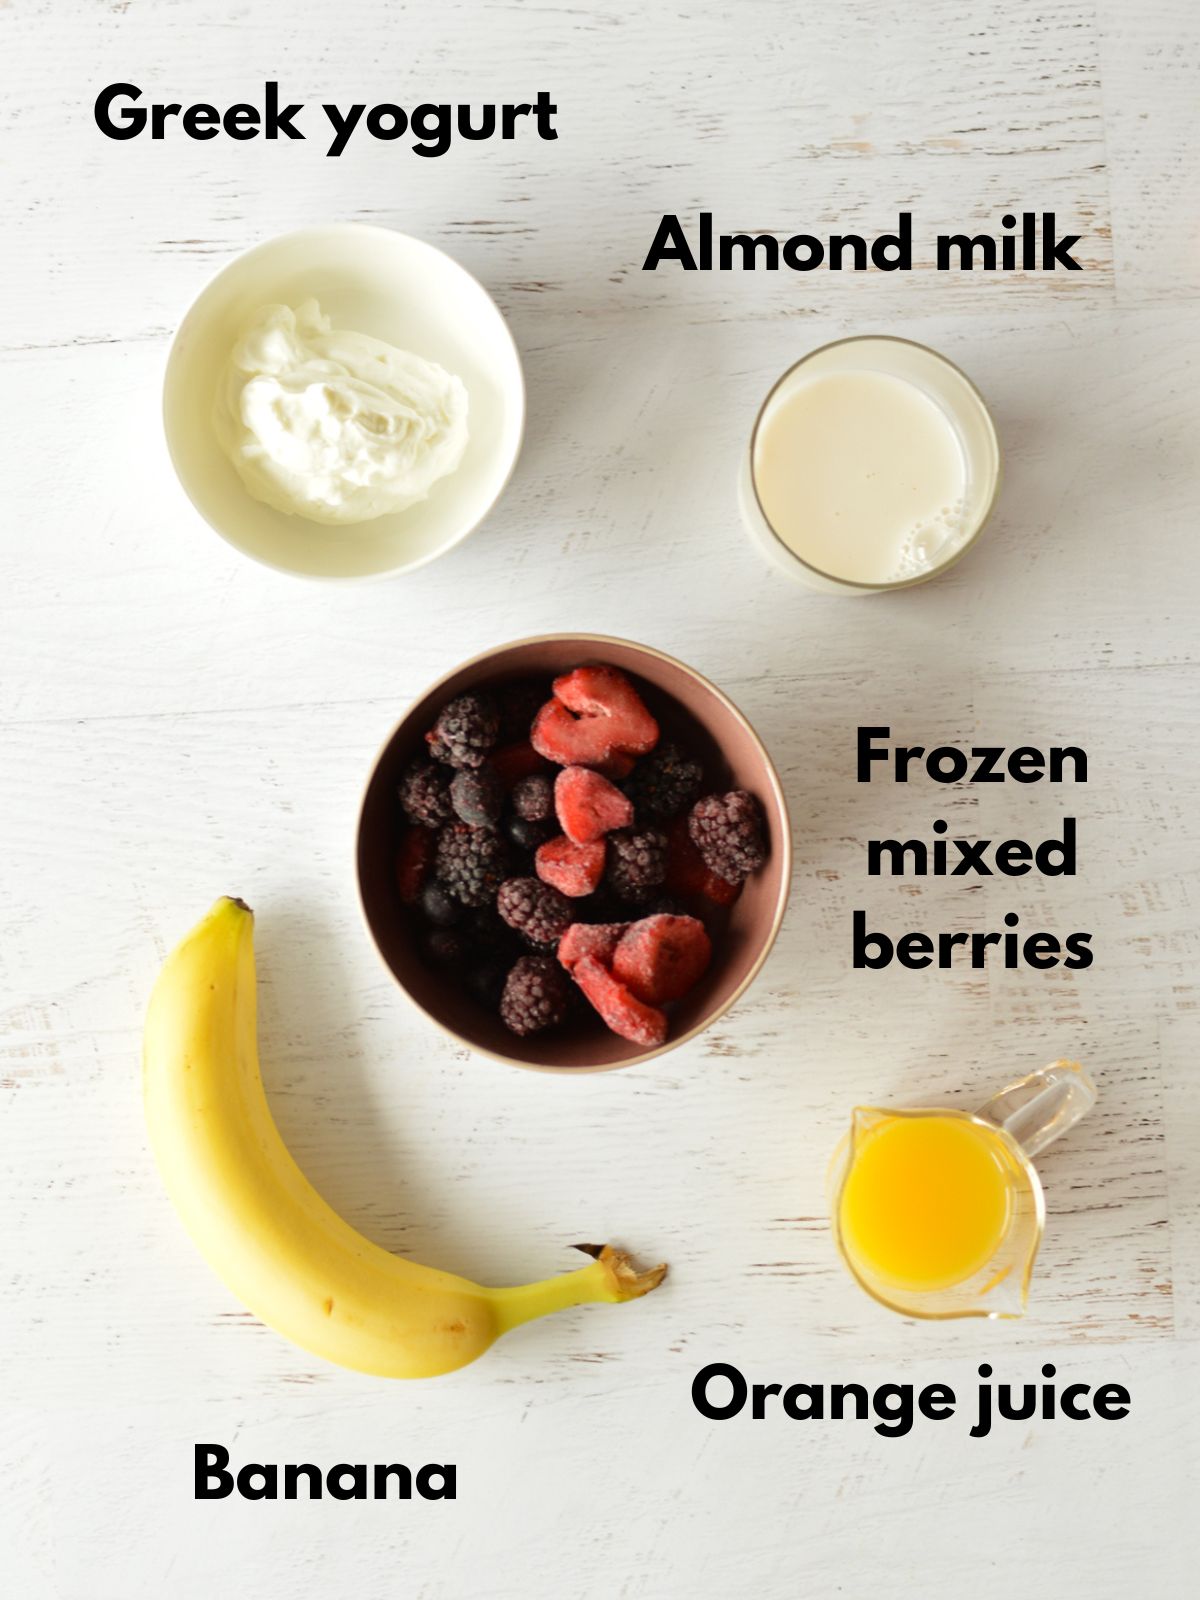 yogurt, almond milk, berries, orange juice, and banana.